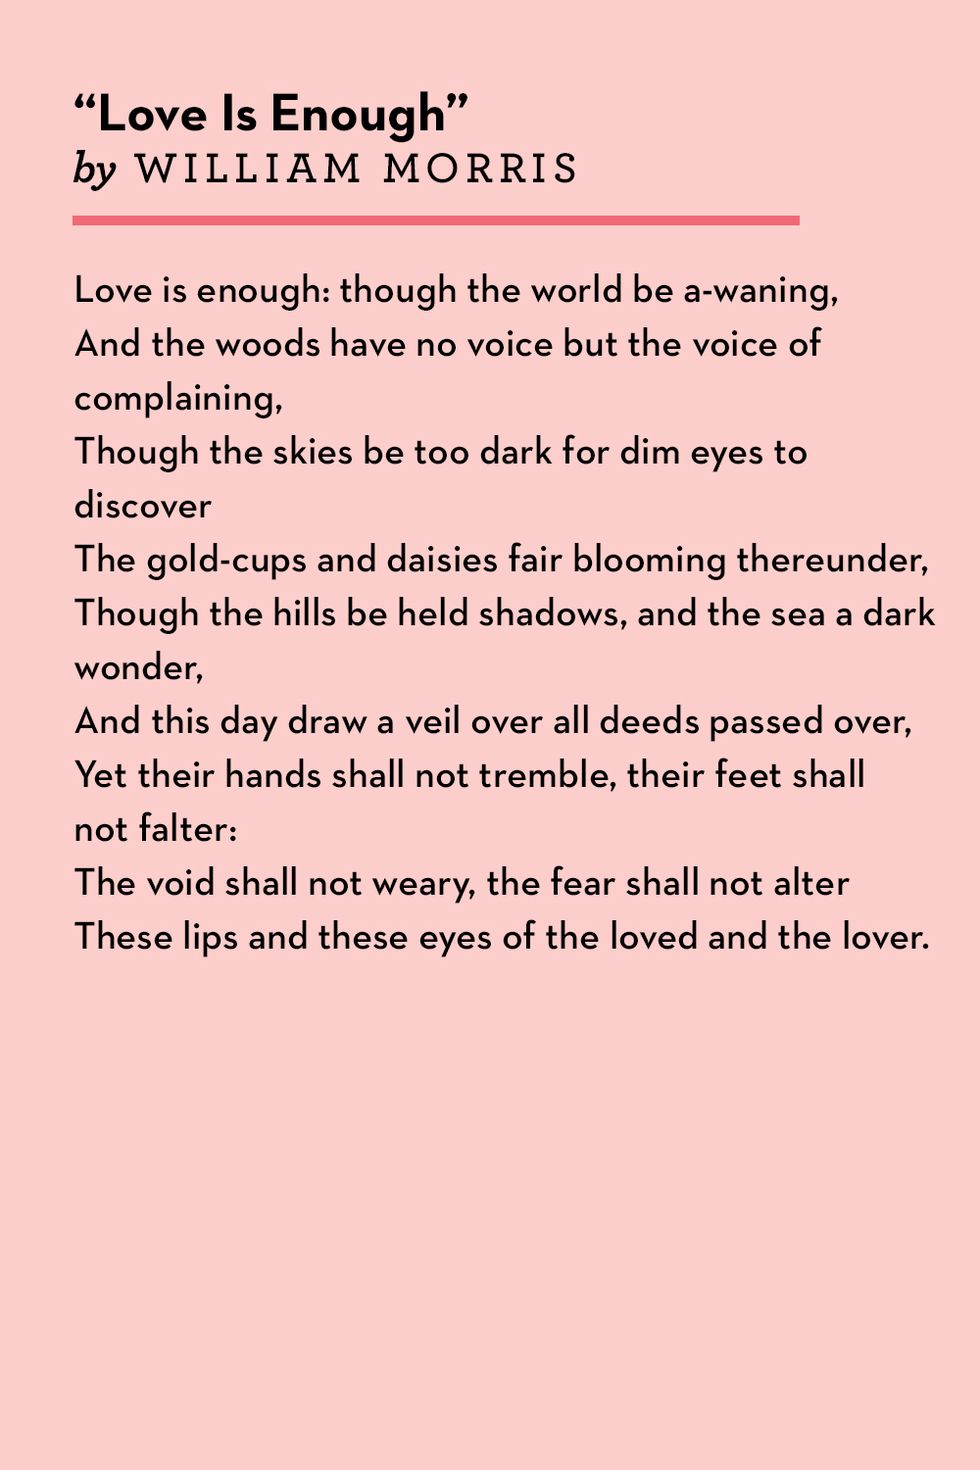 Passion” Poem - Send Love Poems